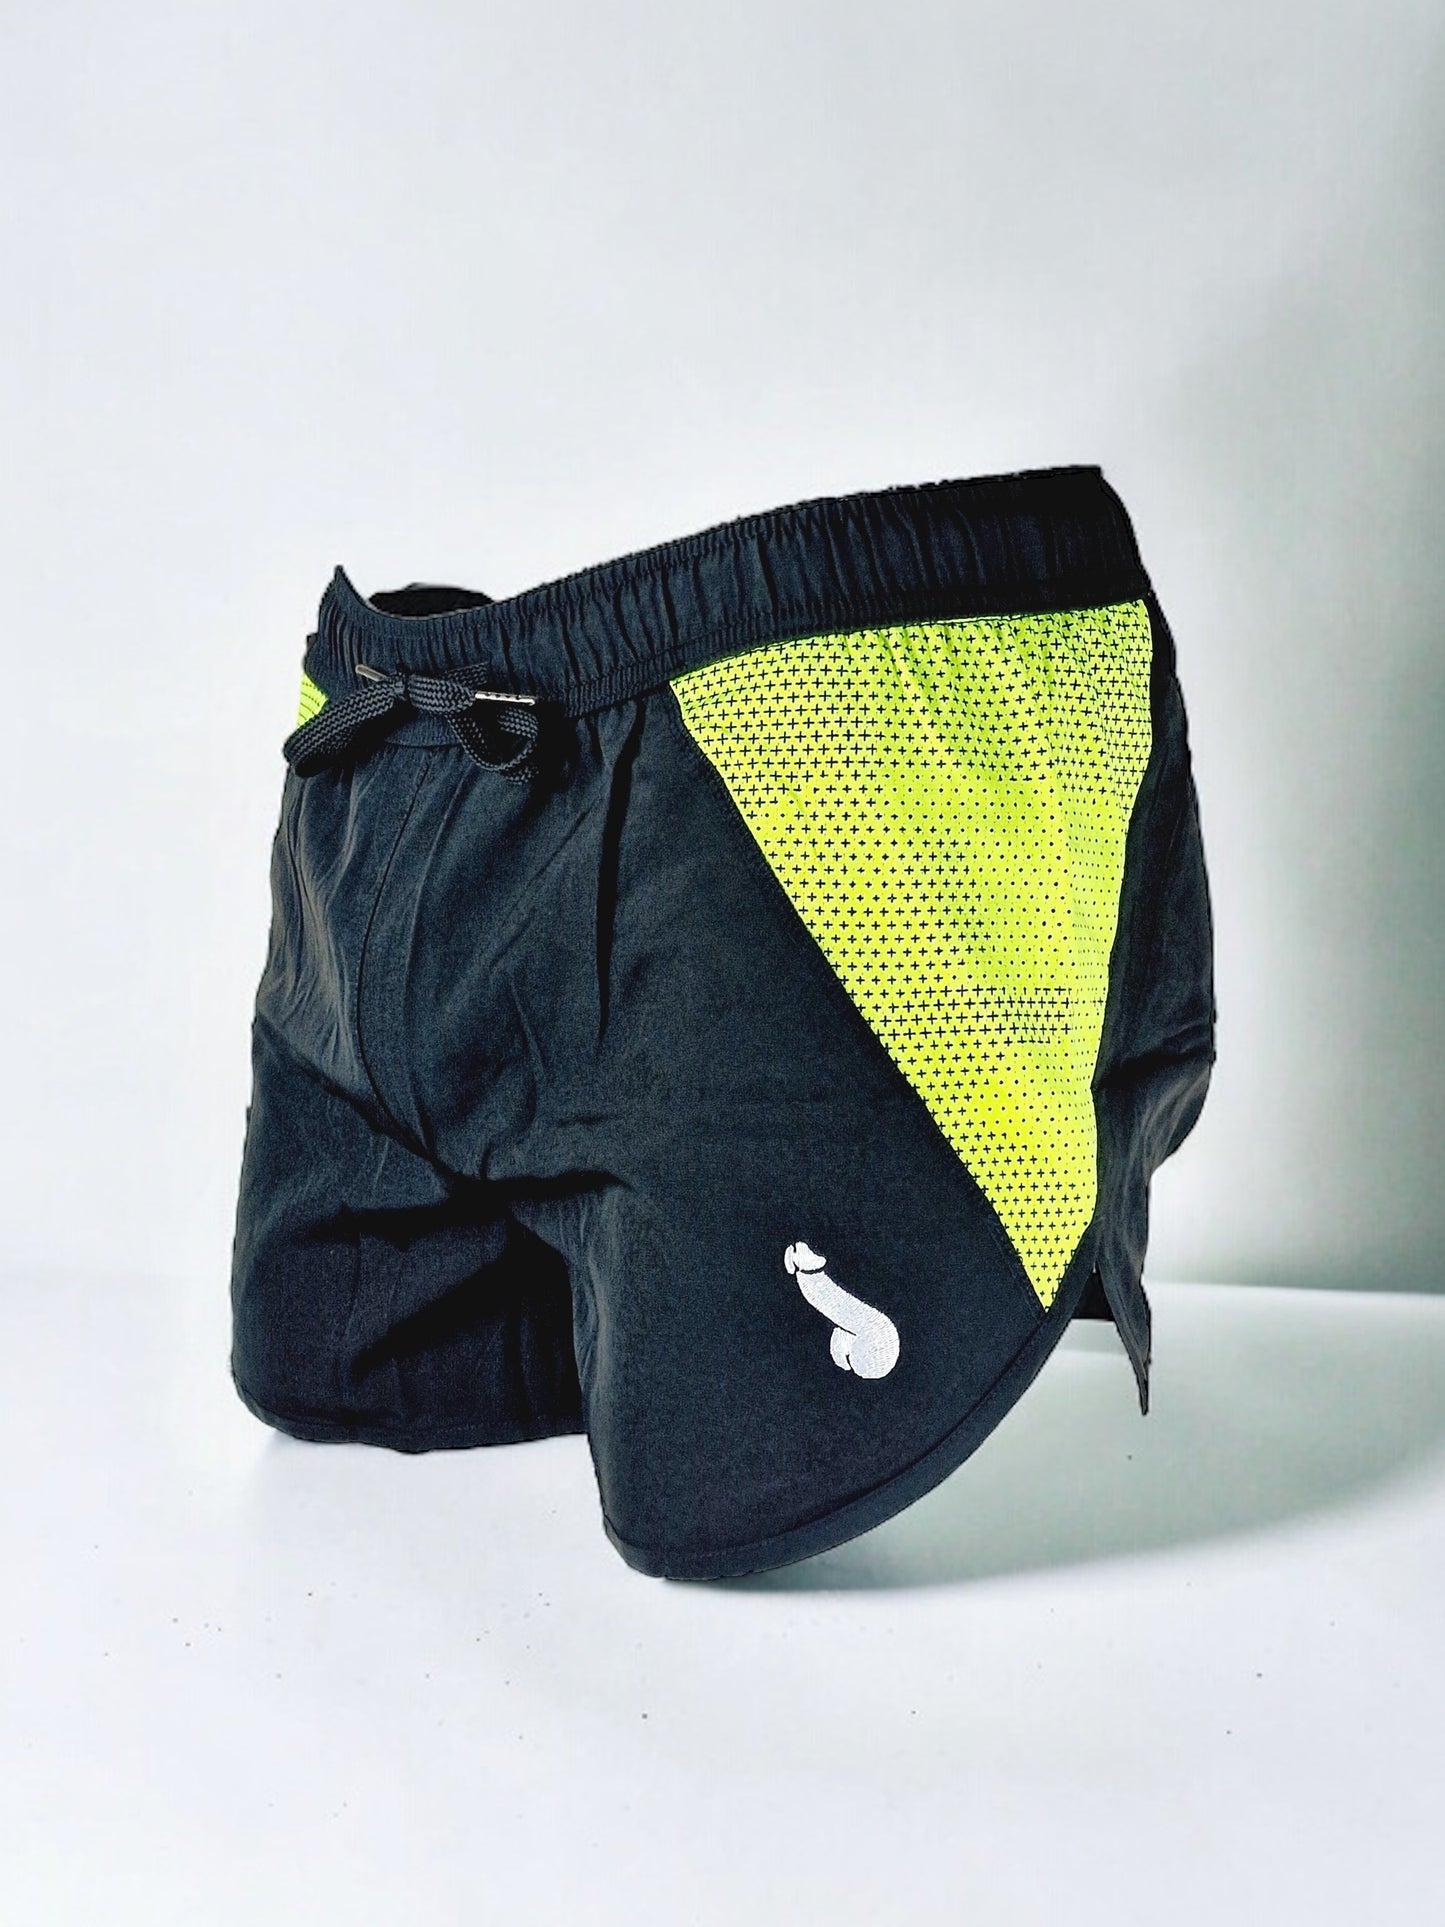 Training shorts / swimming shorts for men or unisex - Black/Green